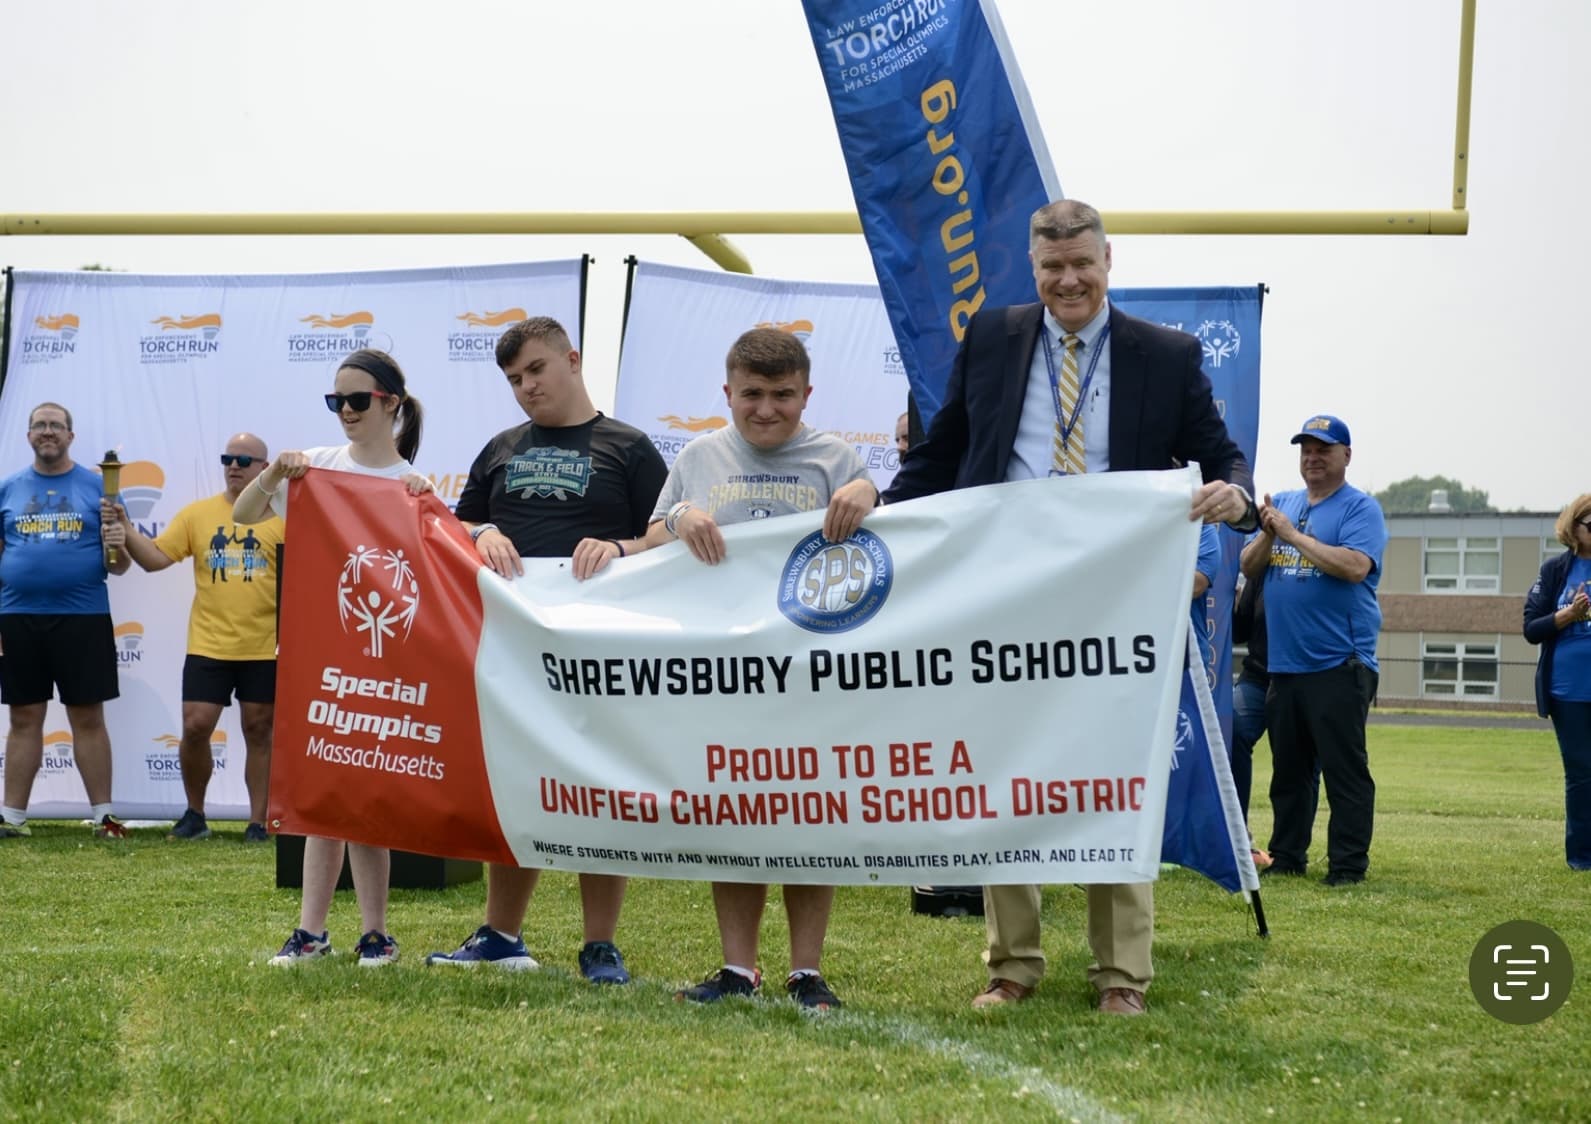 Shrewsbury schools named Unified Champion